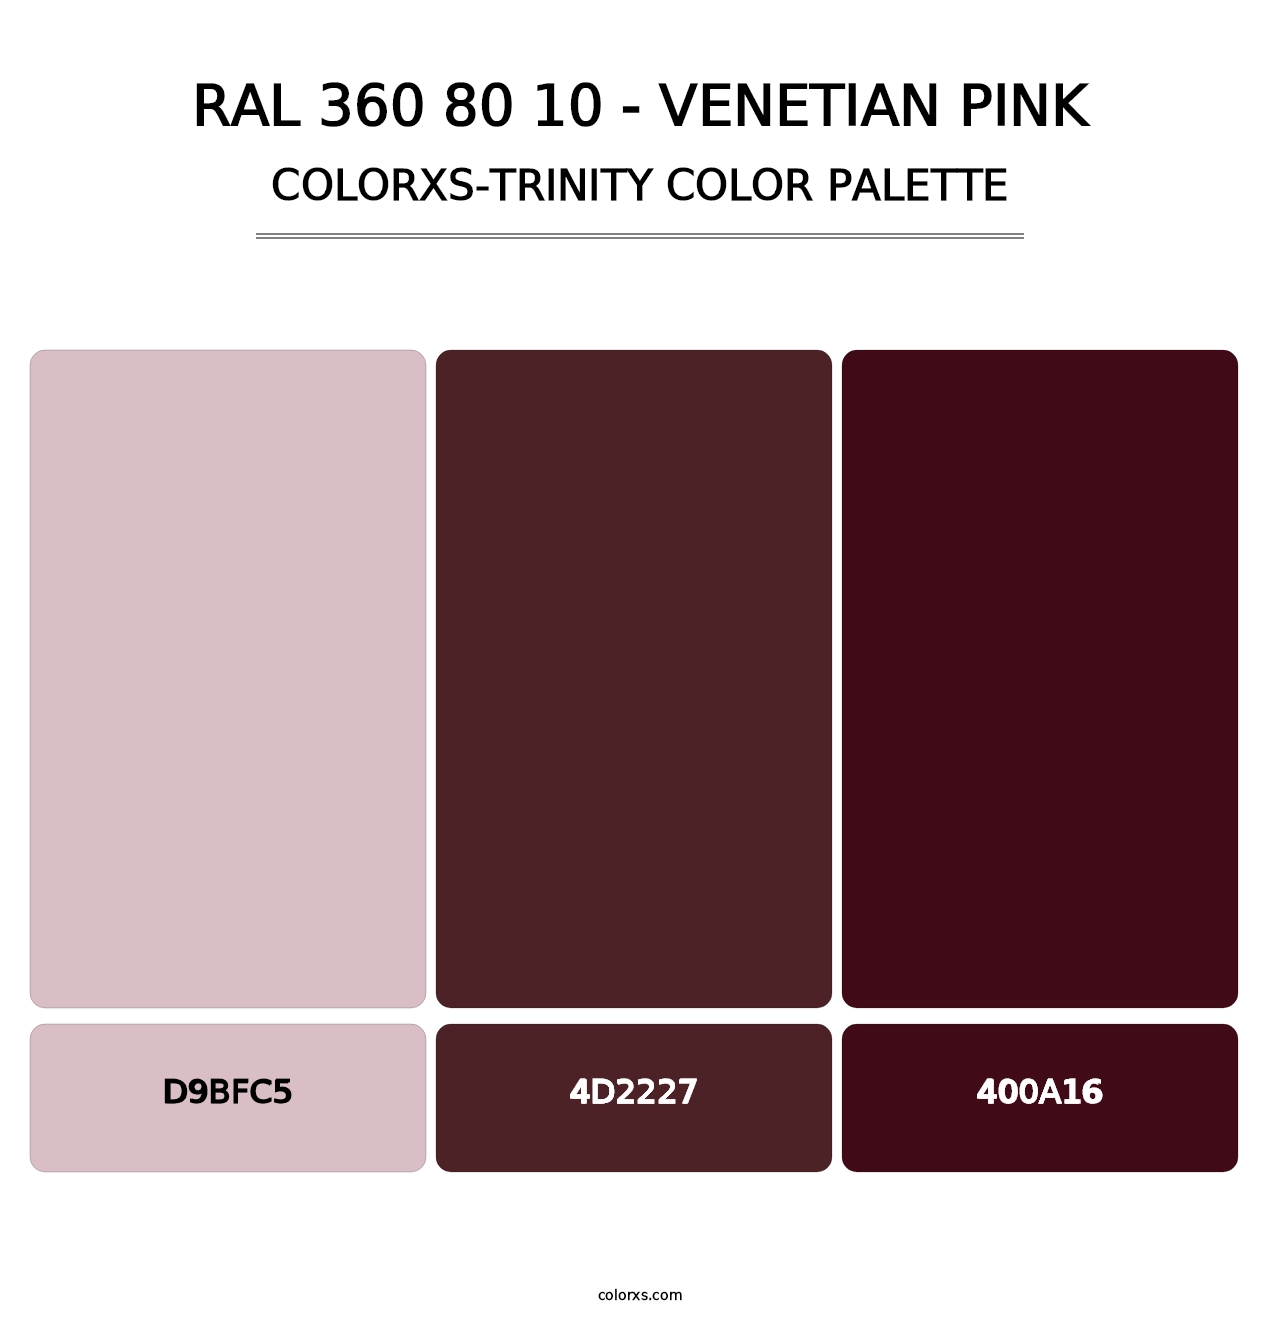 RAL 360 80 10 - Venetian Pink - Colorxs Trinity Palette